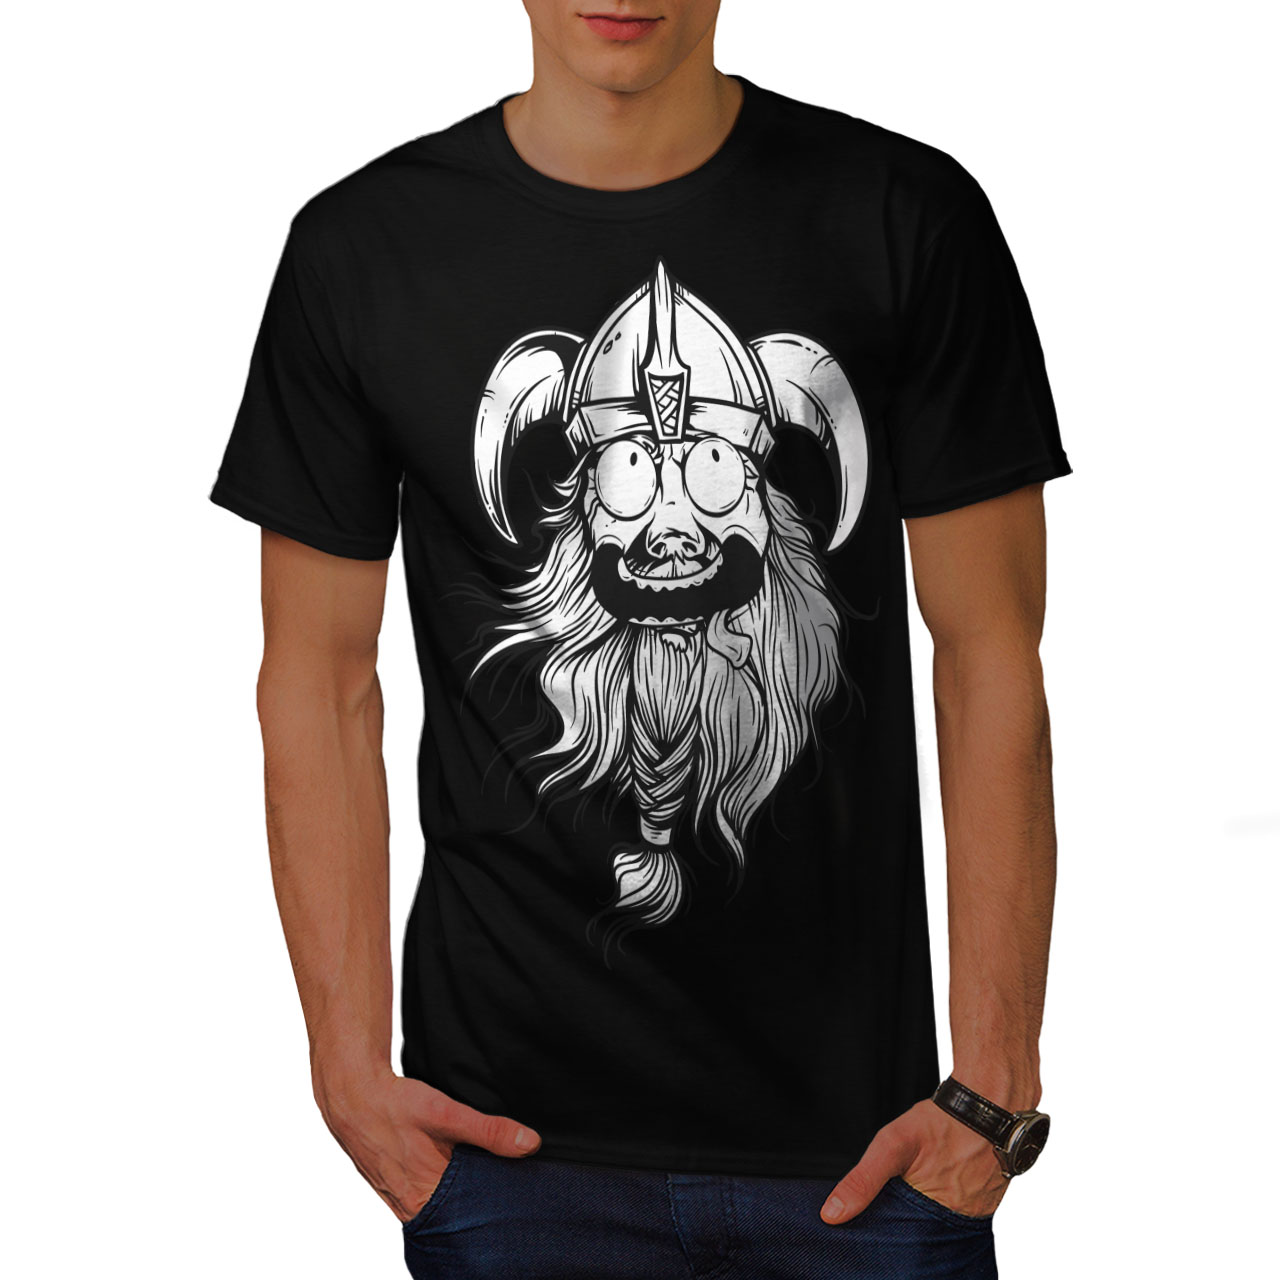 Wellcoda Crazy North Joke Mens T-shirt Nordic Graphic Design Printed Tee 